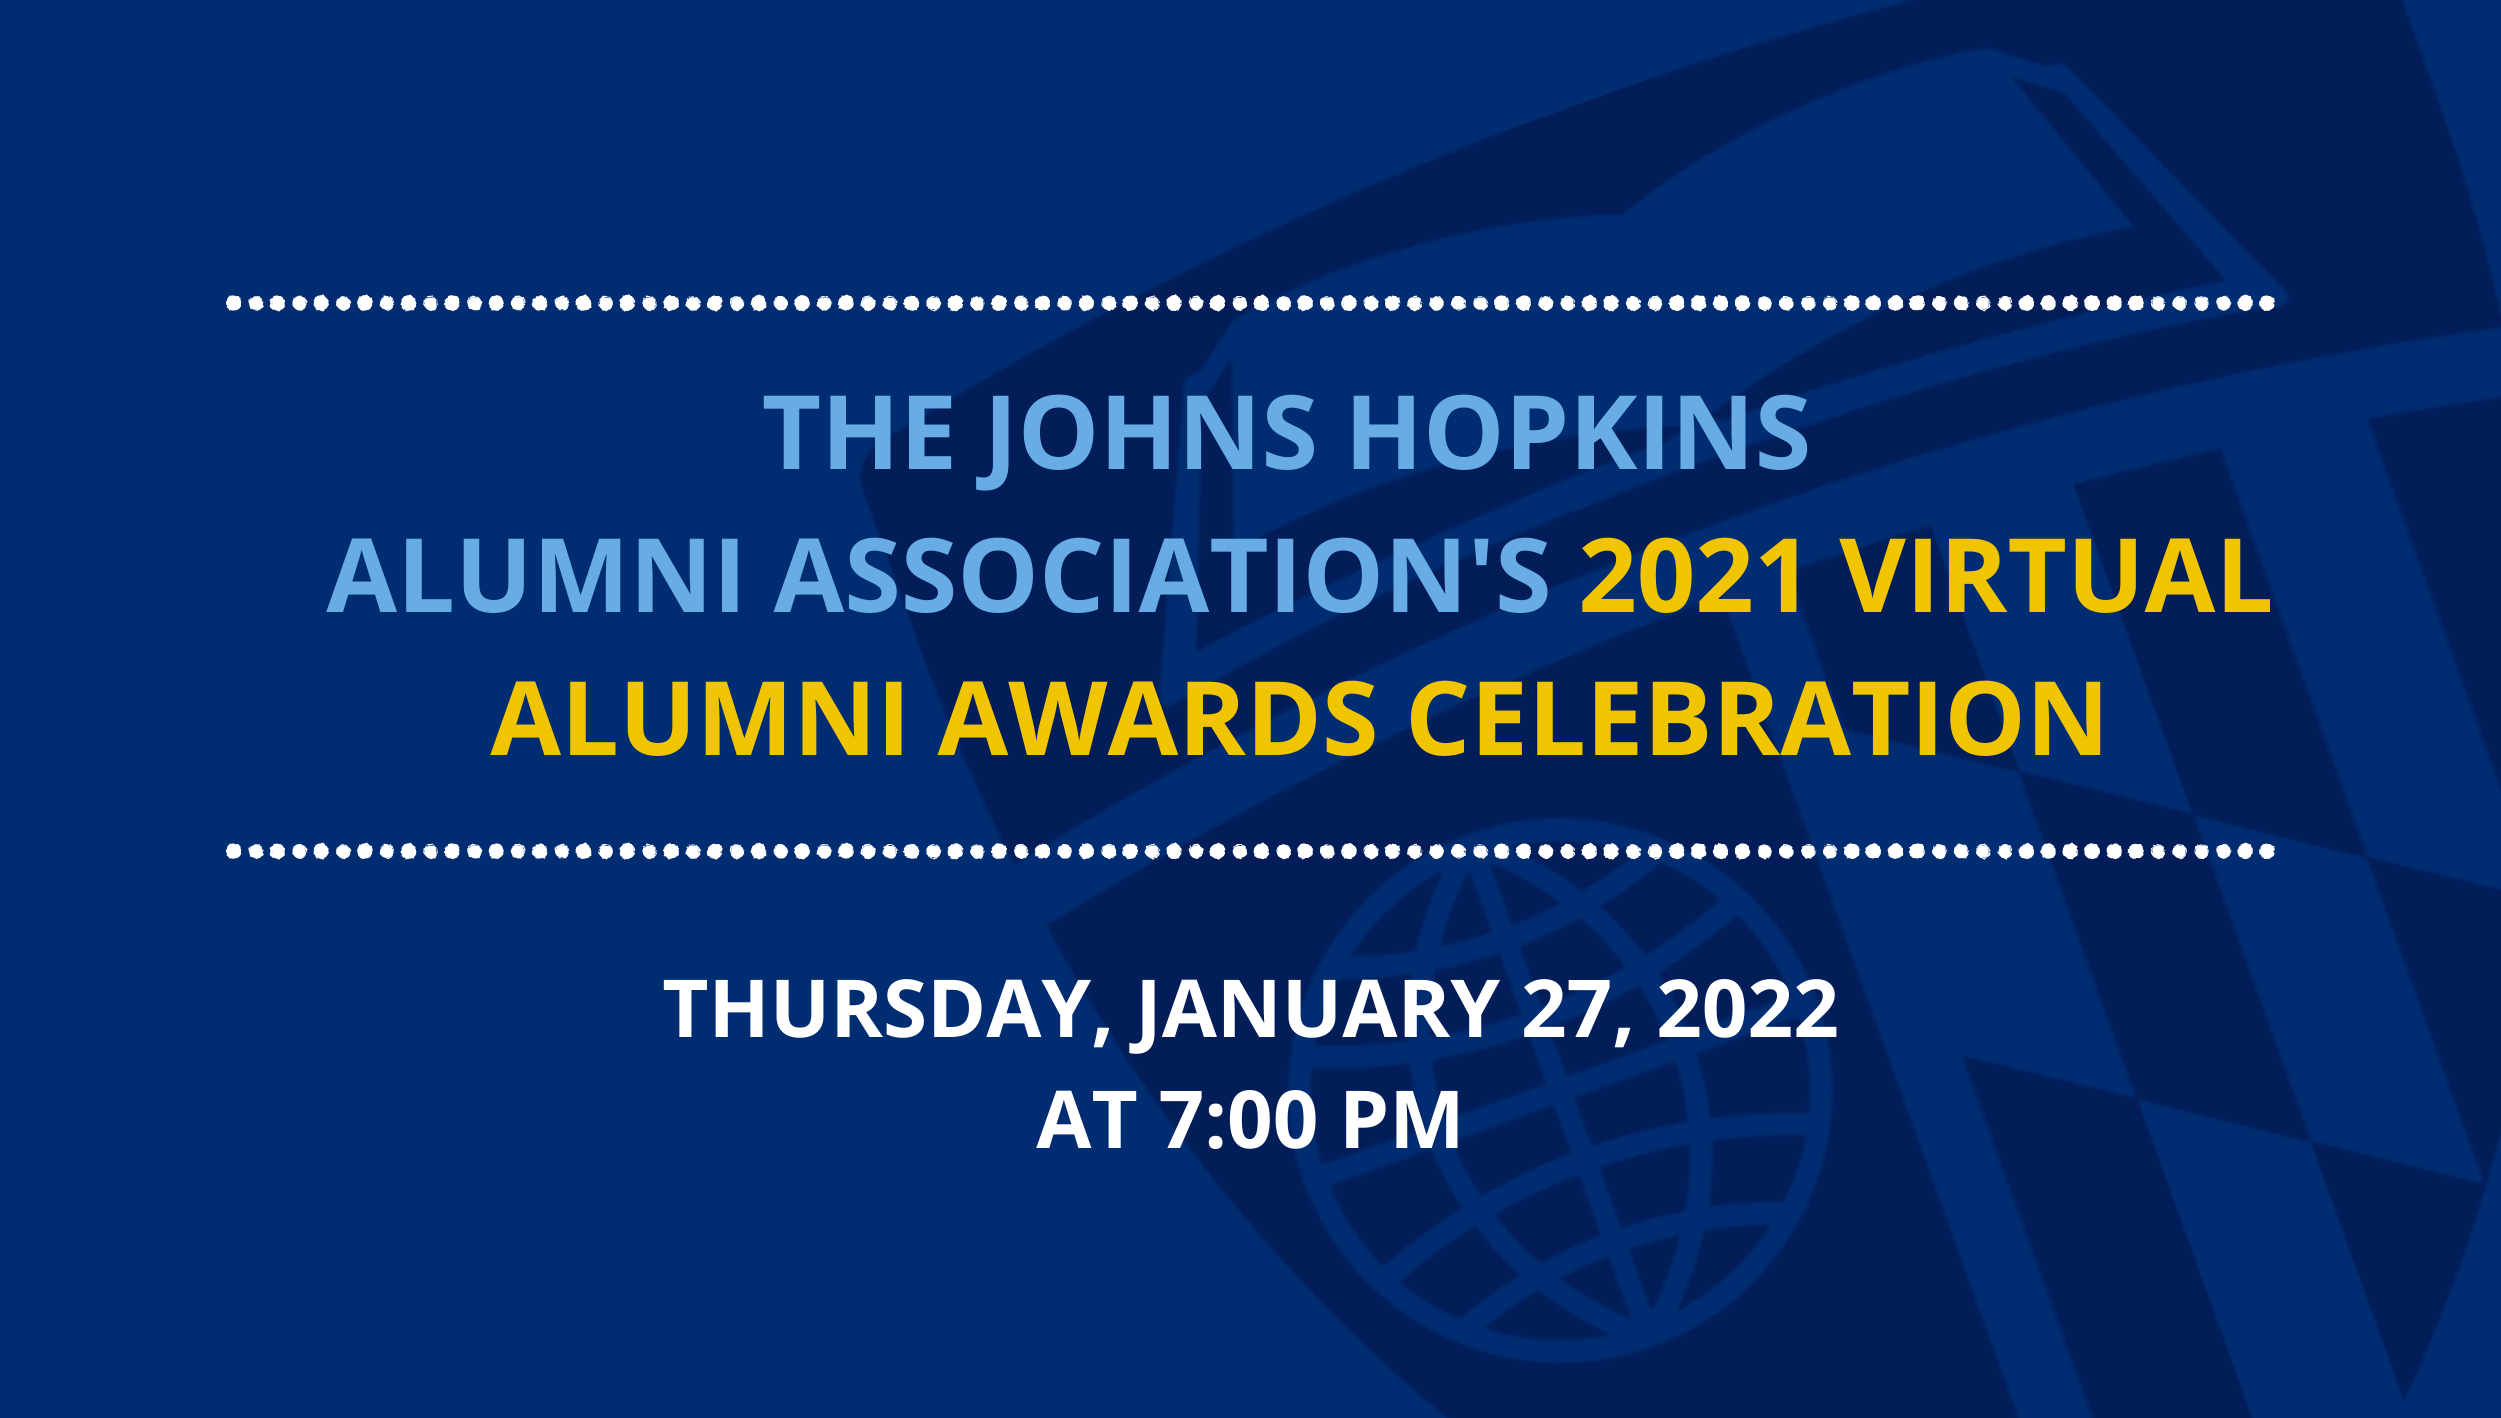 Blue background with text: The Johns Hopkins Alumni Association's 2021 Virtual Alumni Awards Celebration; Thursday, January 27, 